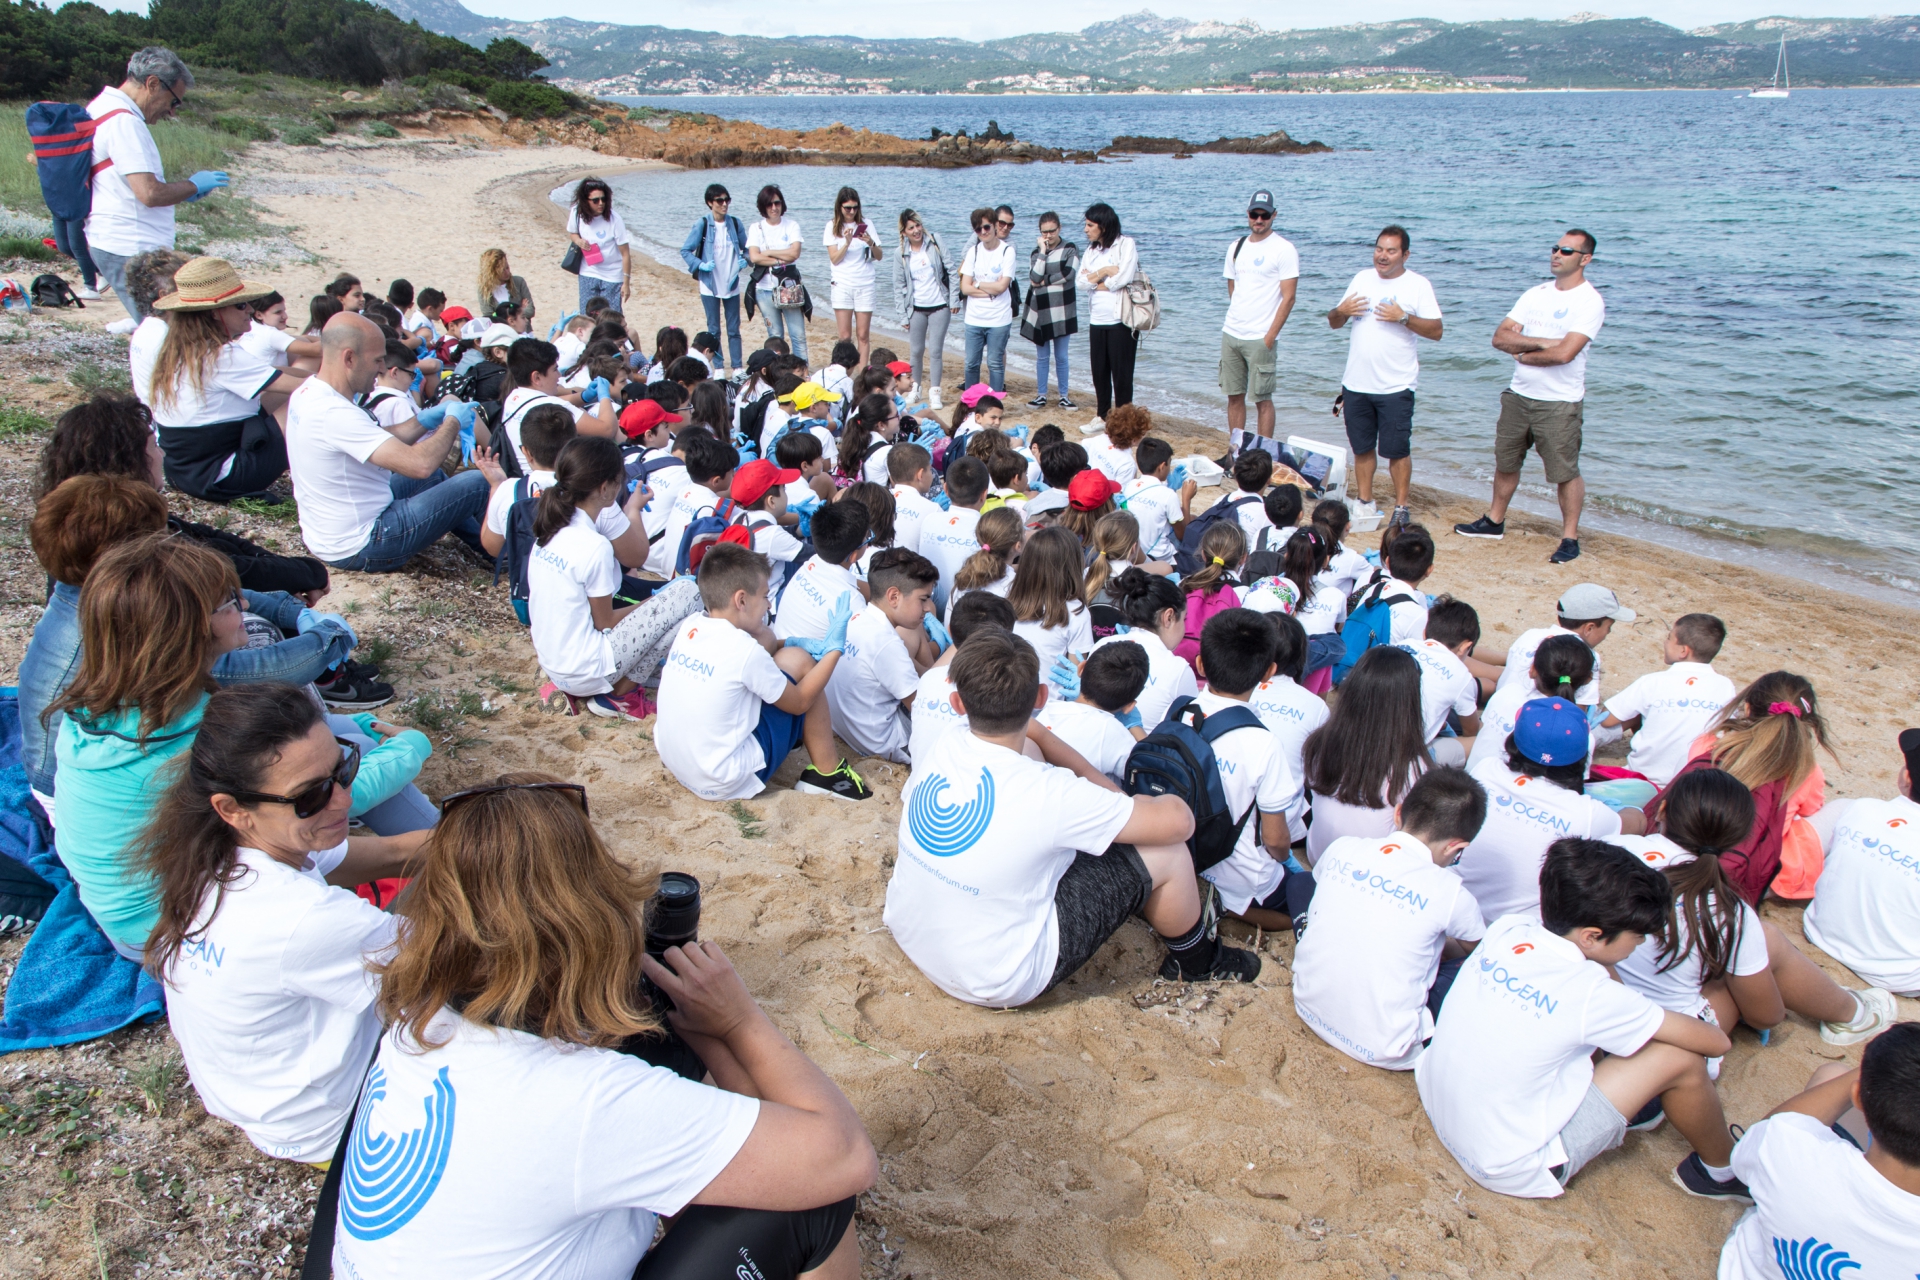 YCCS Clean Beach Day aperto a tutti l'8 giugno  - NEWS - Yacht Club Costa Smeralda